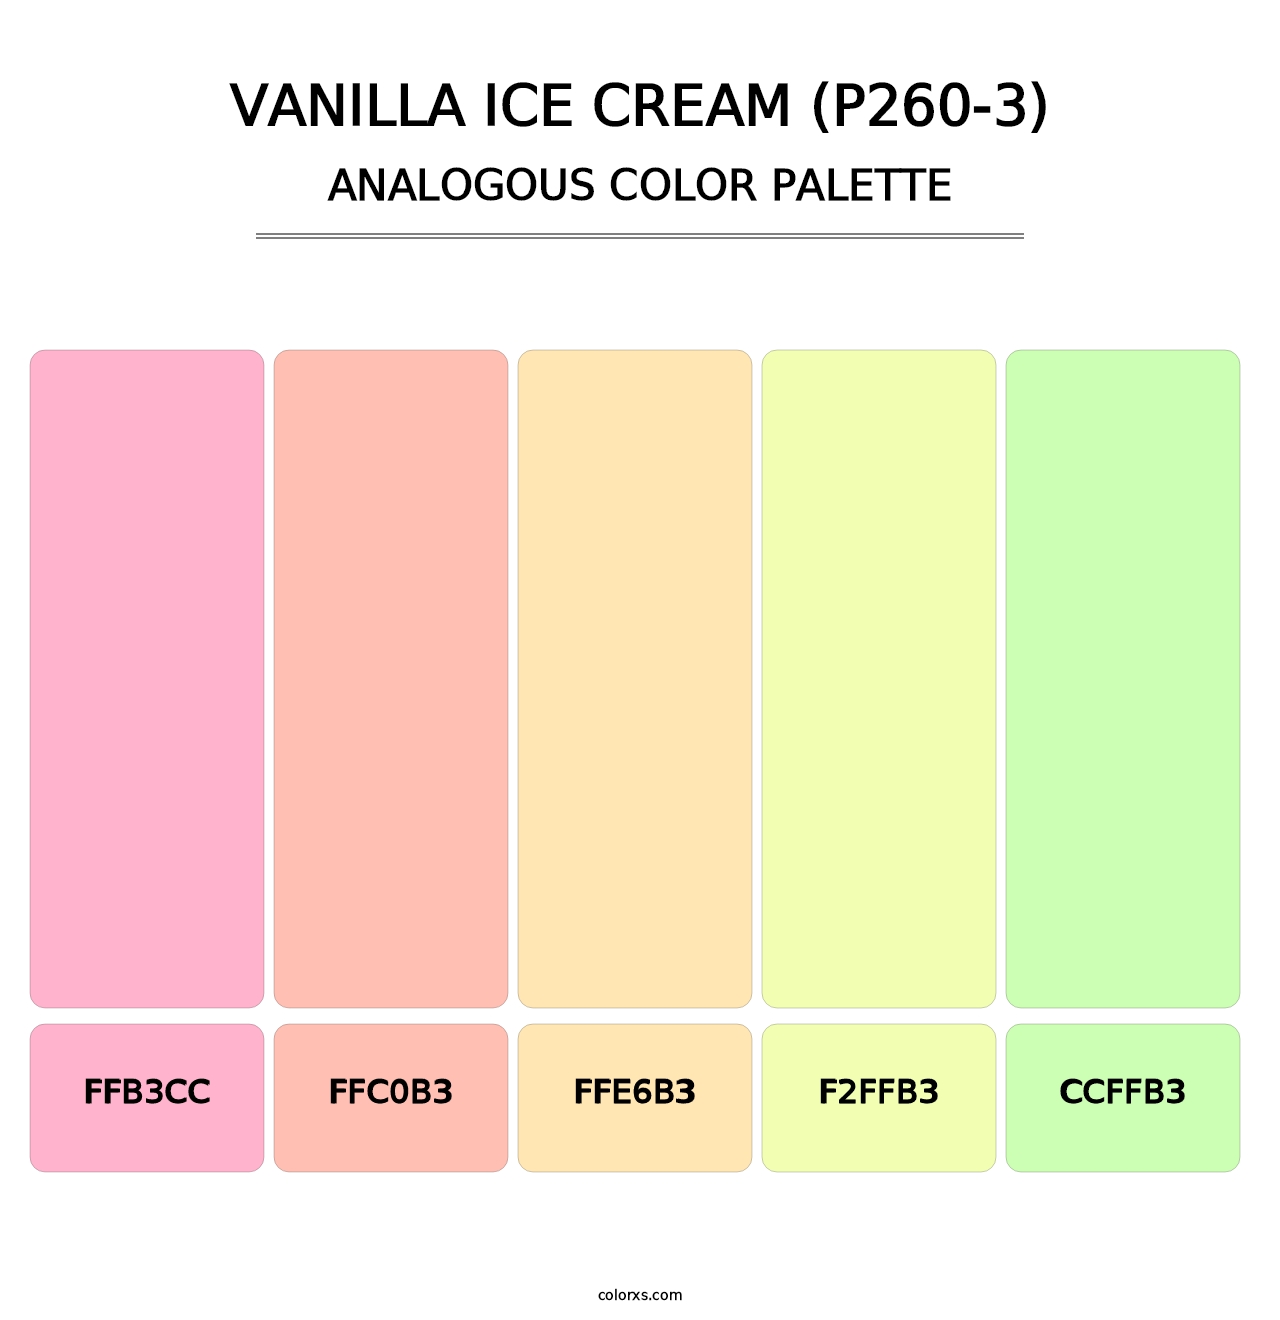 Vanilla Ice Cream (P260-3) - Analogous Color Palette